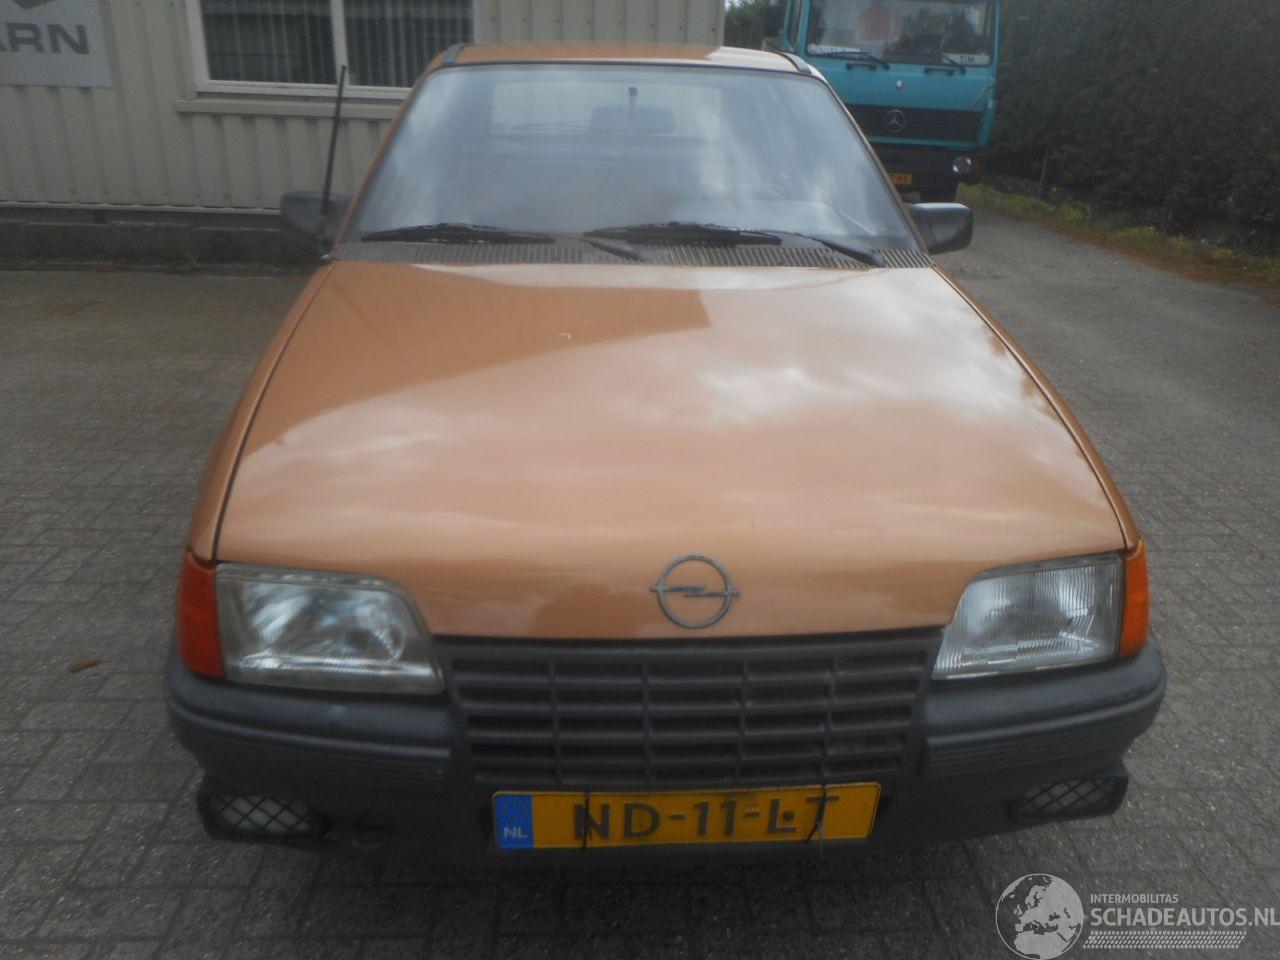 Opel Kadett orgineel nederlandse auto